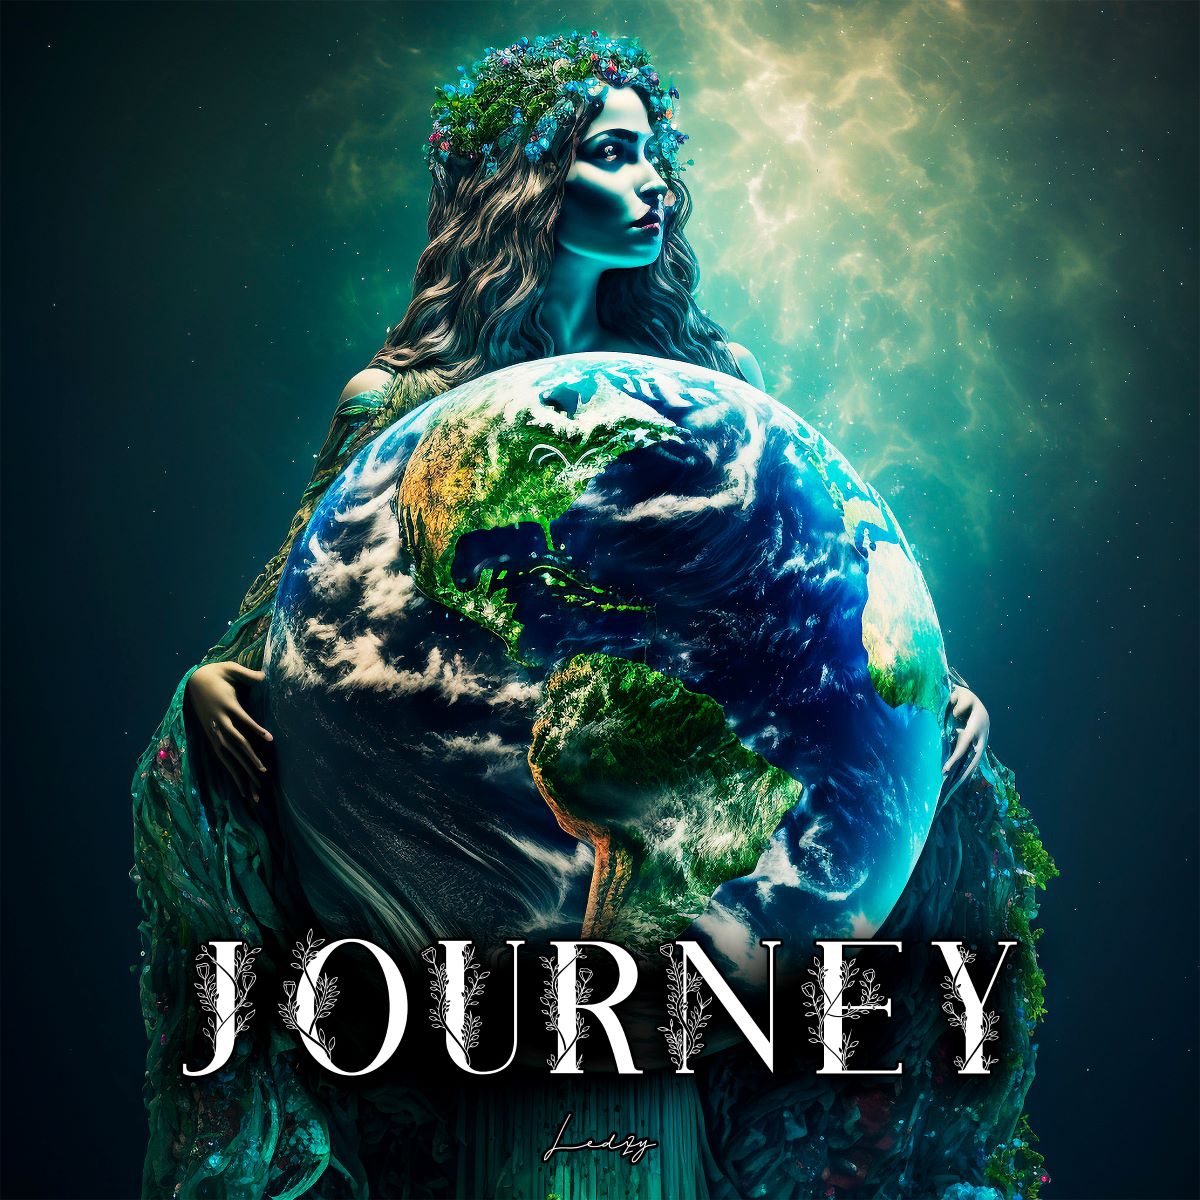 LEDZy - “Journey”